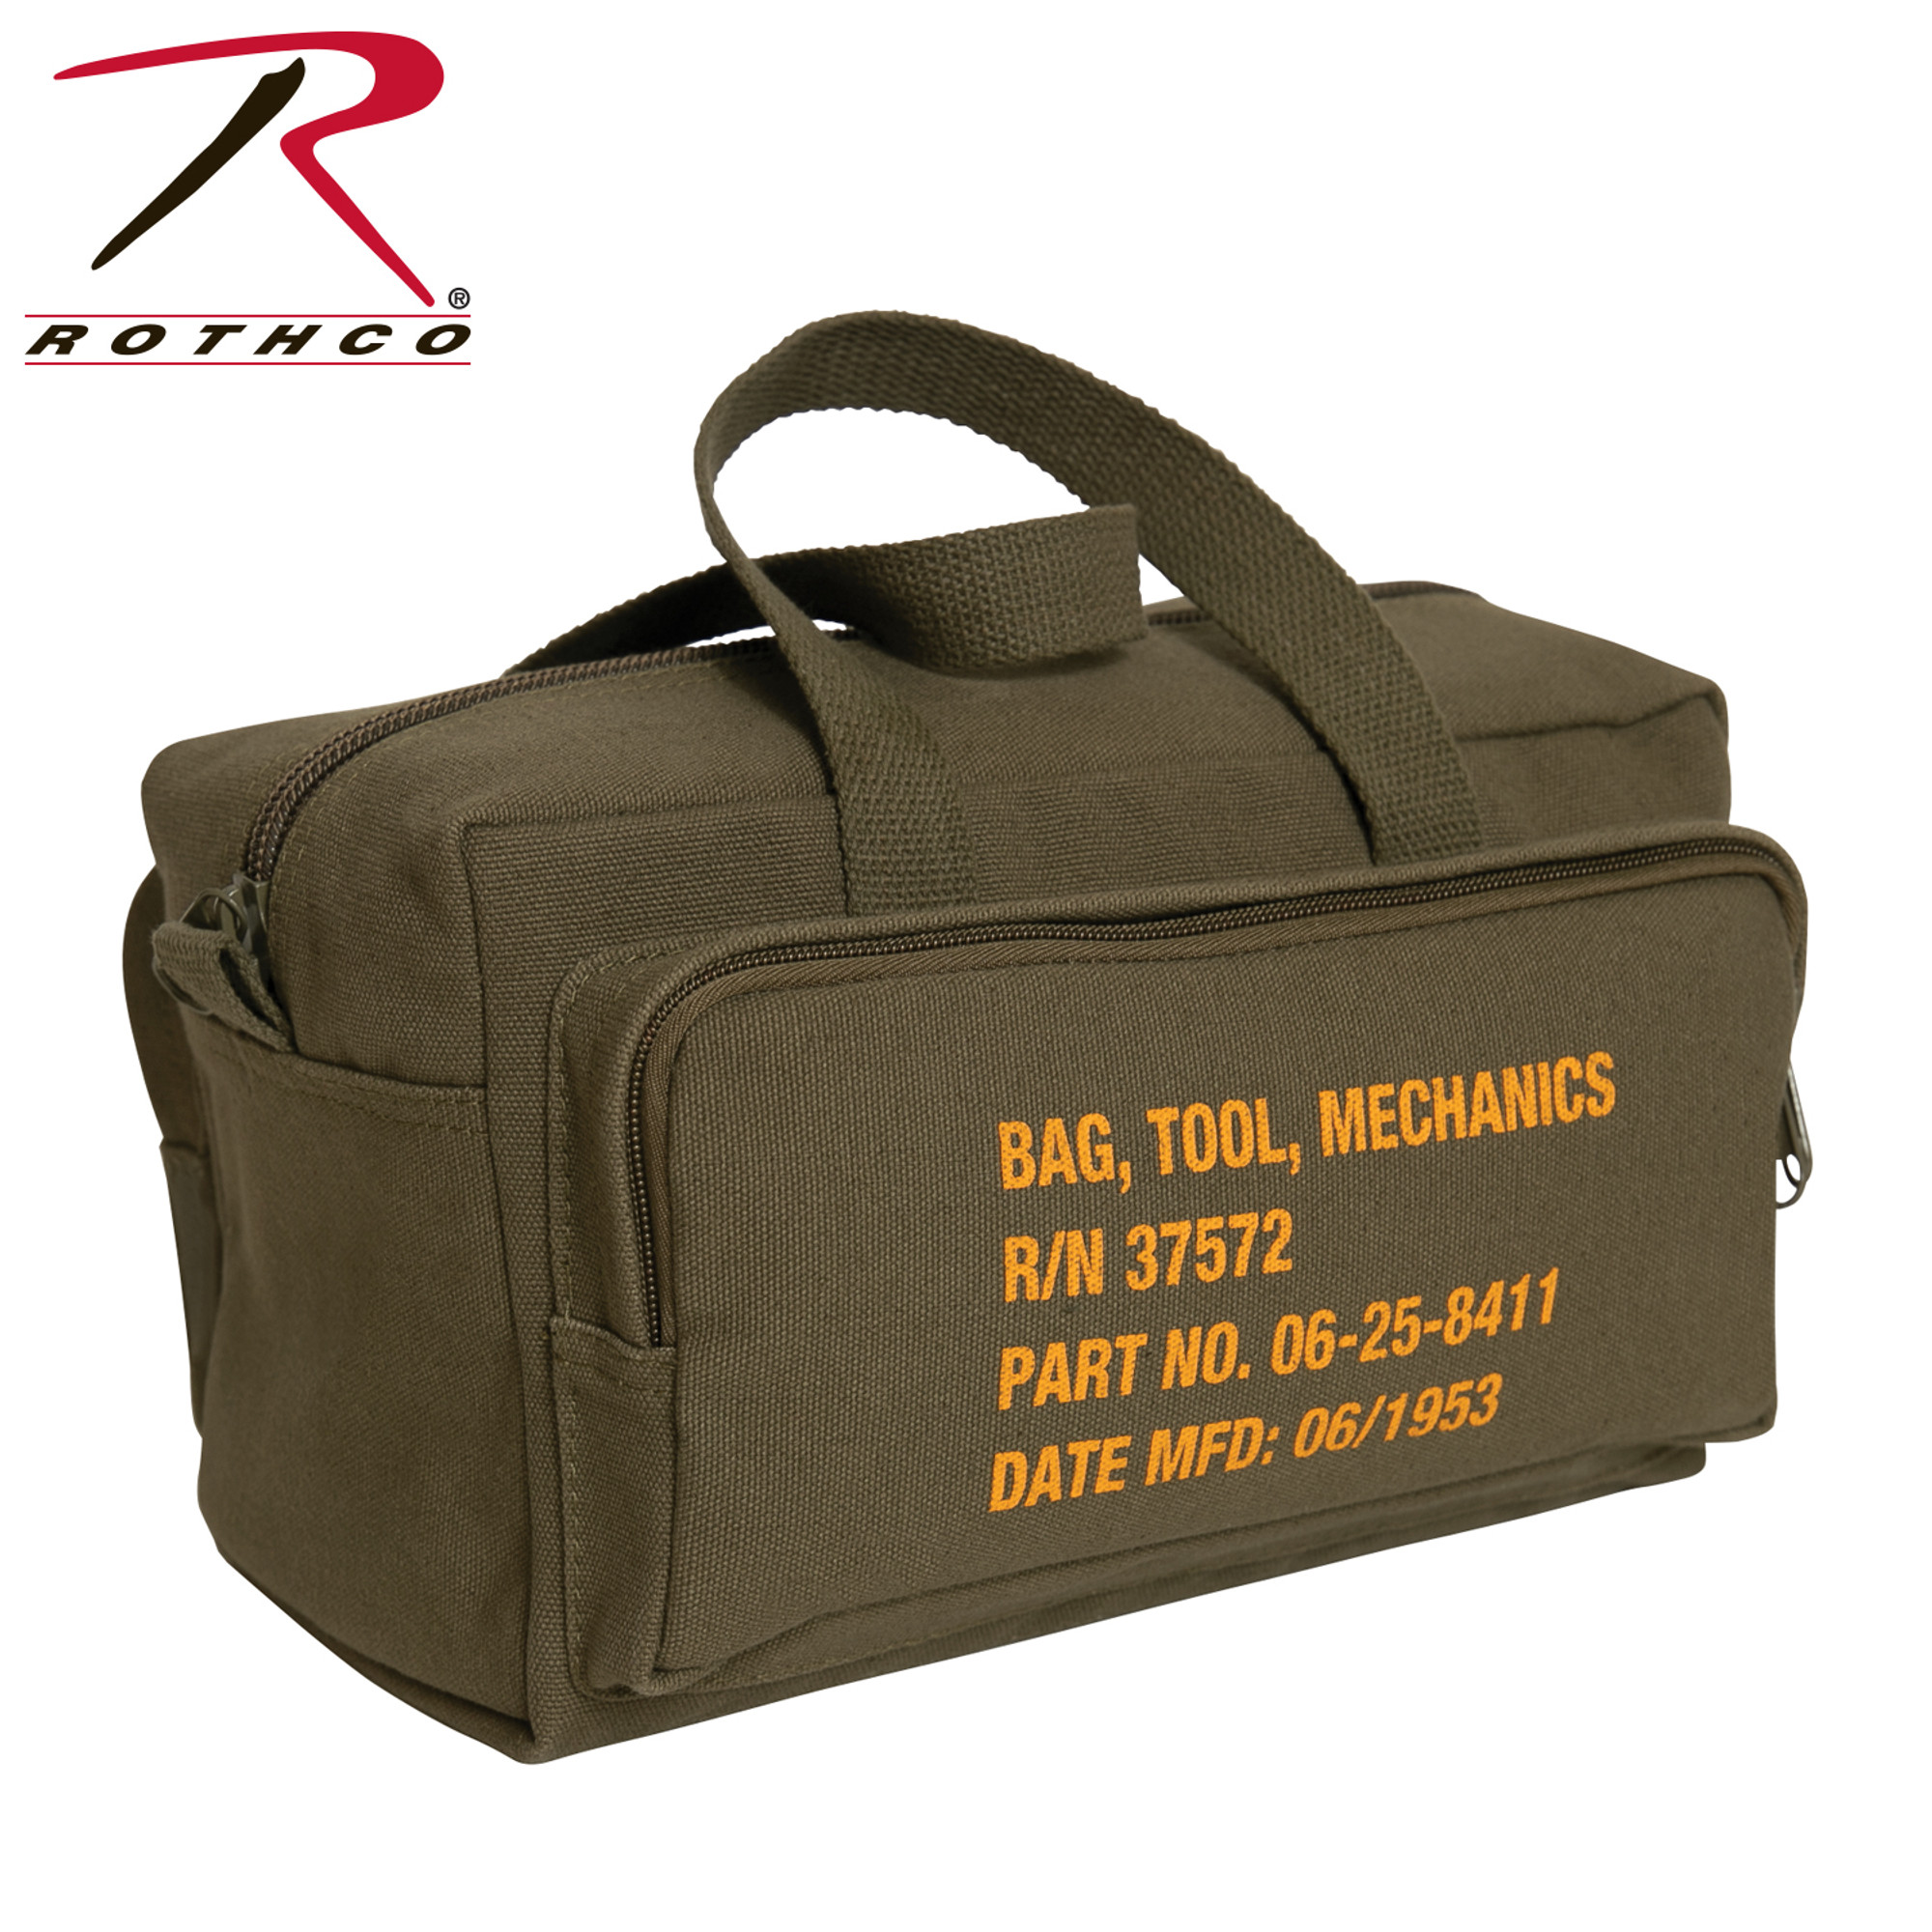 Rothco G.I. Type Zipper Pocket Mechanics Tool Bag w/Military Stencil - Olive Drab